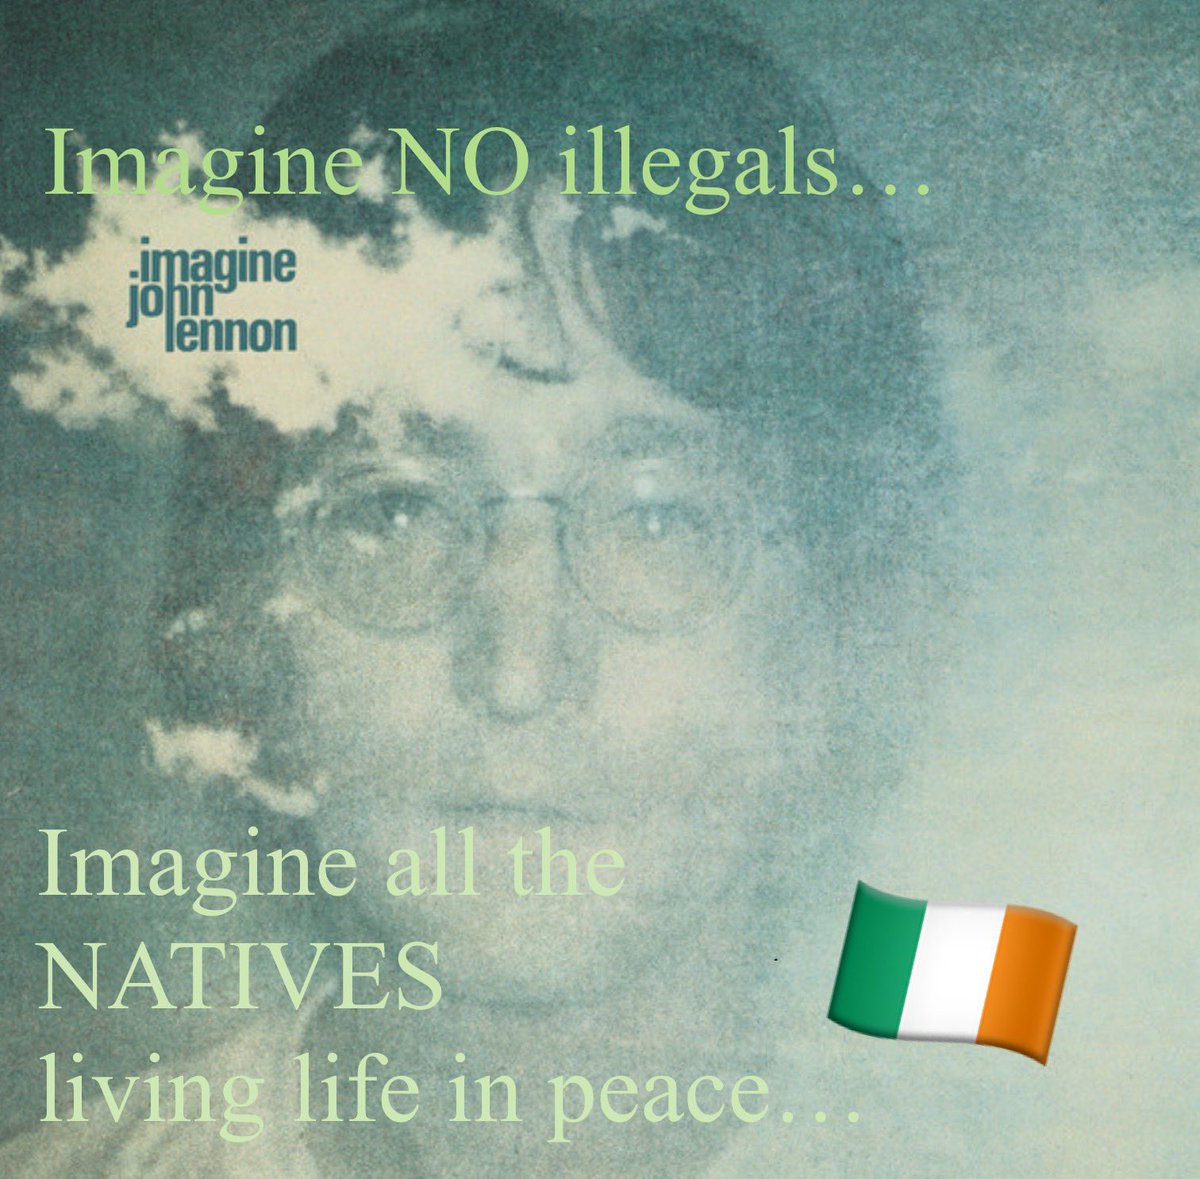 IMAGE NO ILLEGALS✨🙏✨

#Ireland #IrelandBelongsToTheIrish #IrelandOptsOut #IrelandisFull #GetThemOut #DeportThemAll 🇮🇪🇮🇪🇮🇪